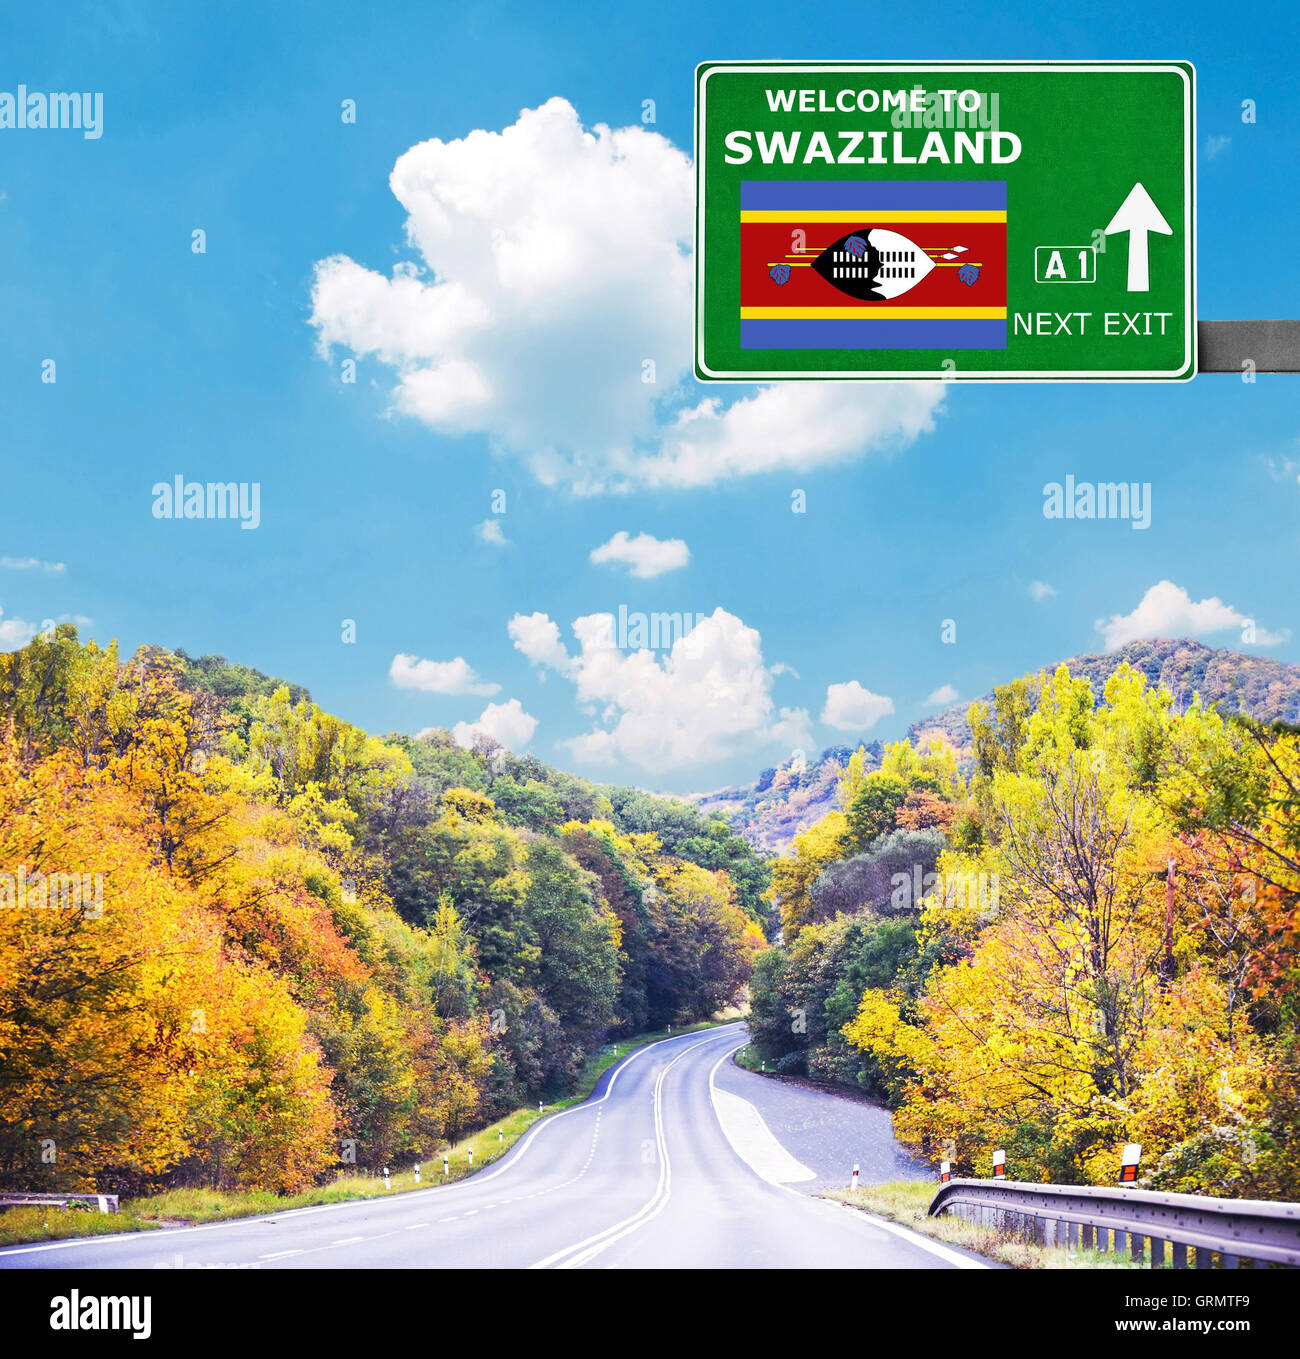 Swasiland-Schild gegen klar blauen Himmel Stockfoto